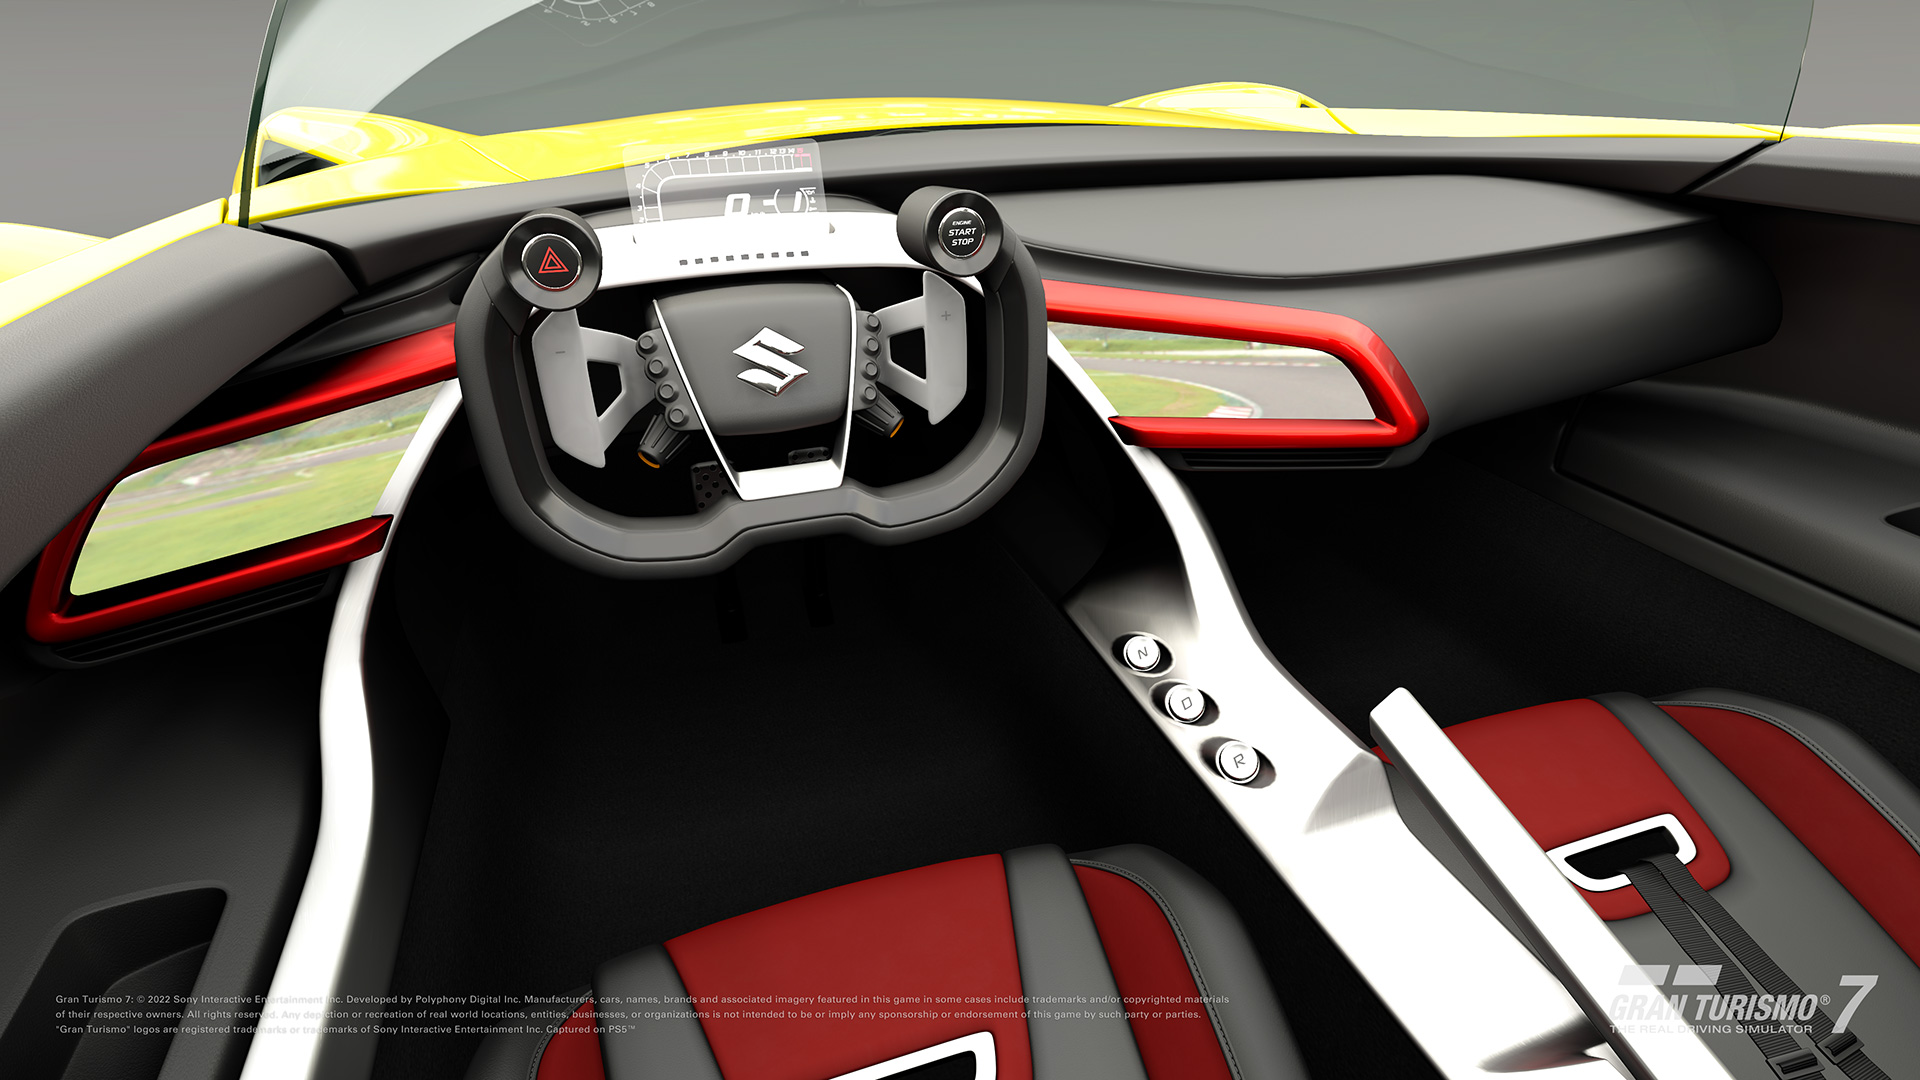 Gran Turismo 7's Latest Update Adds Five New Cars, Including A Minivan